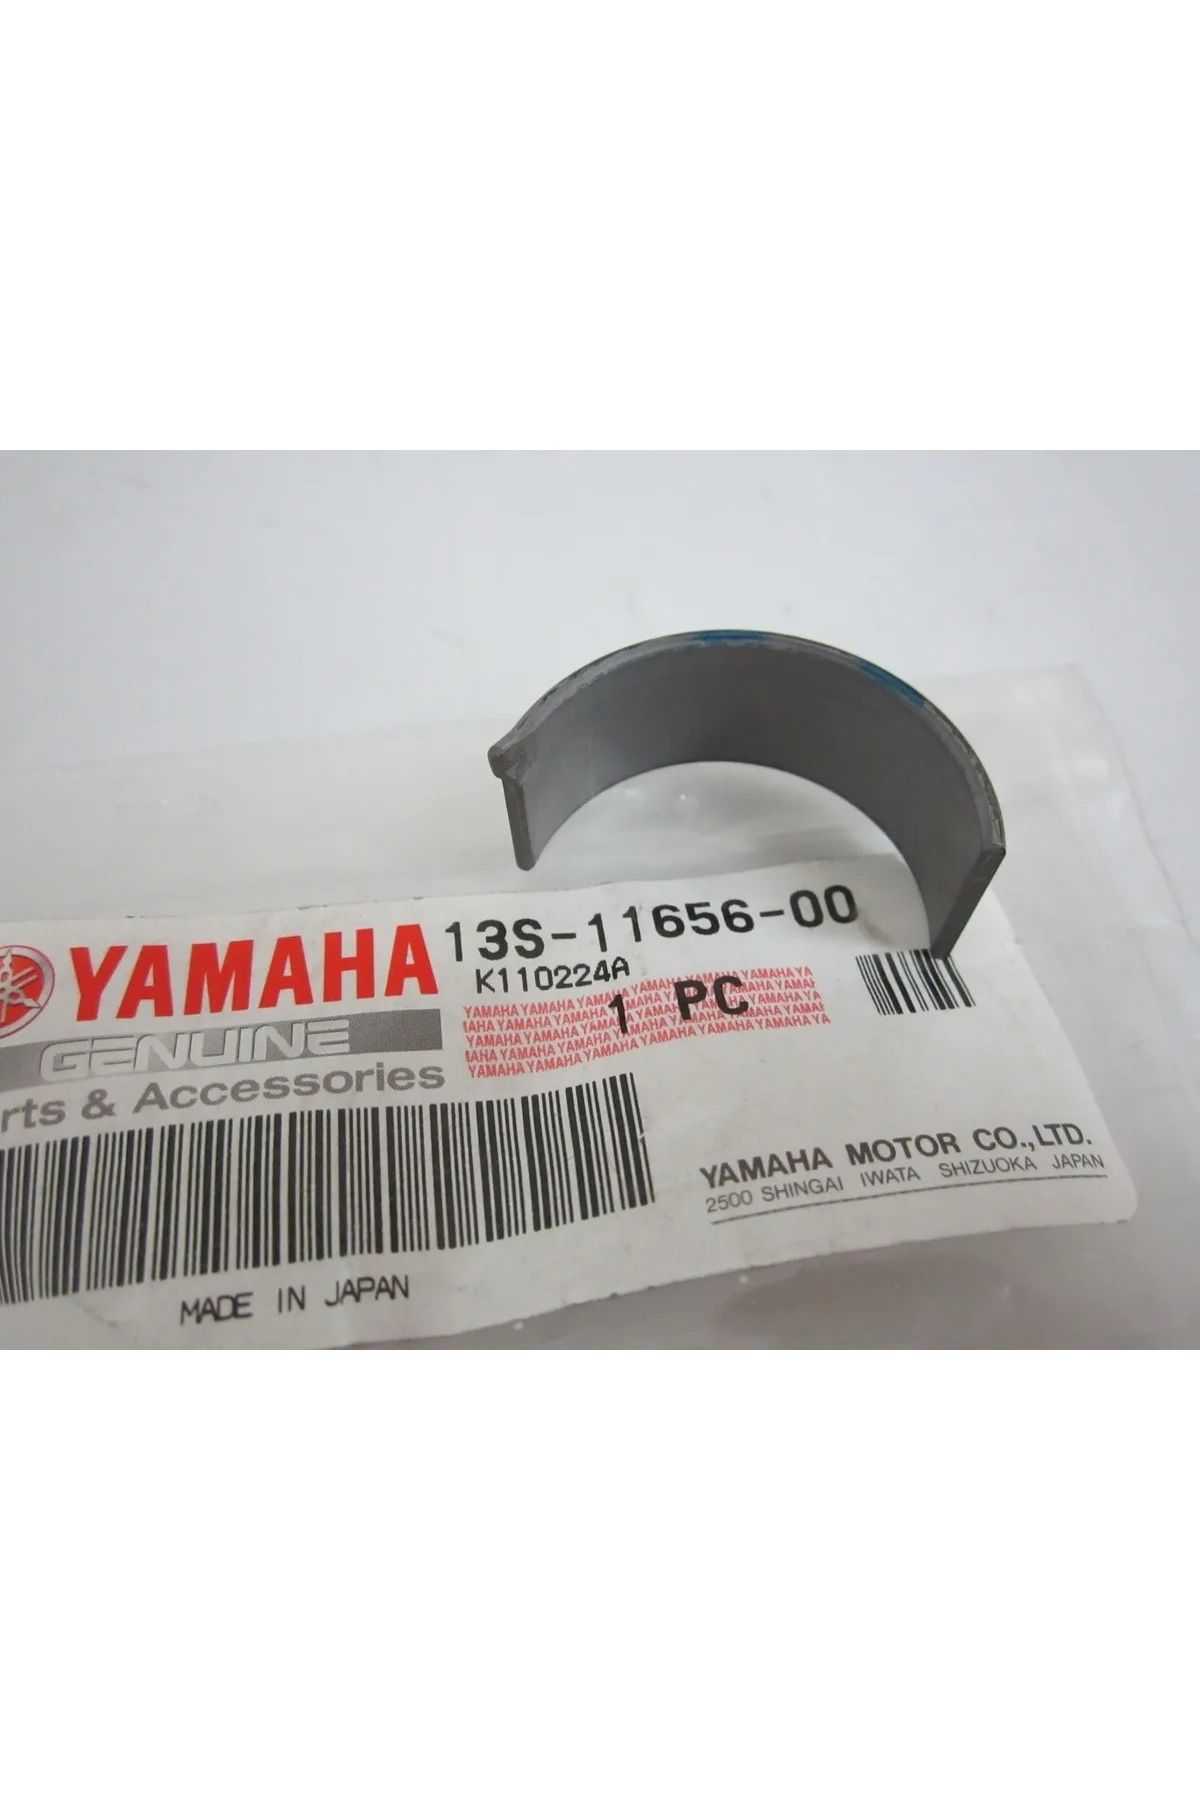 Yamaha R6 KRANK KOL YATAK MAVİ ADET FİYATIDIR 13S-11656-00